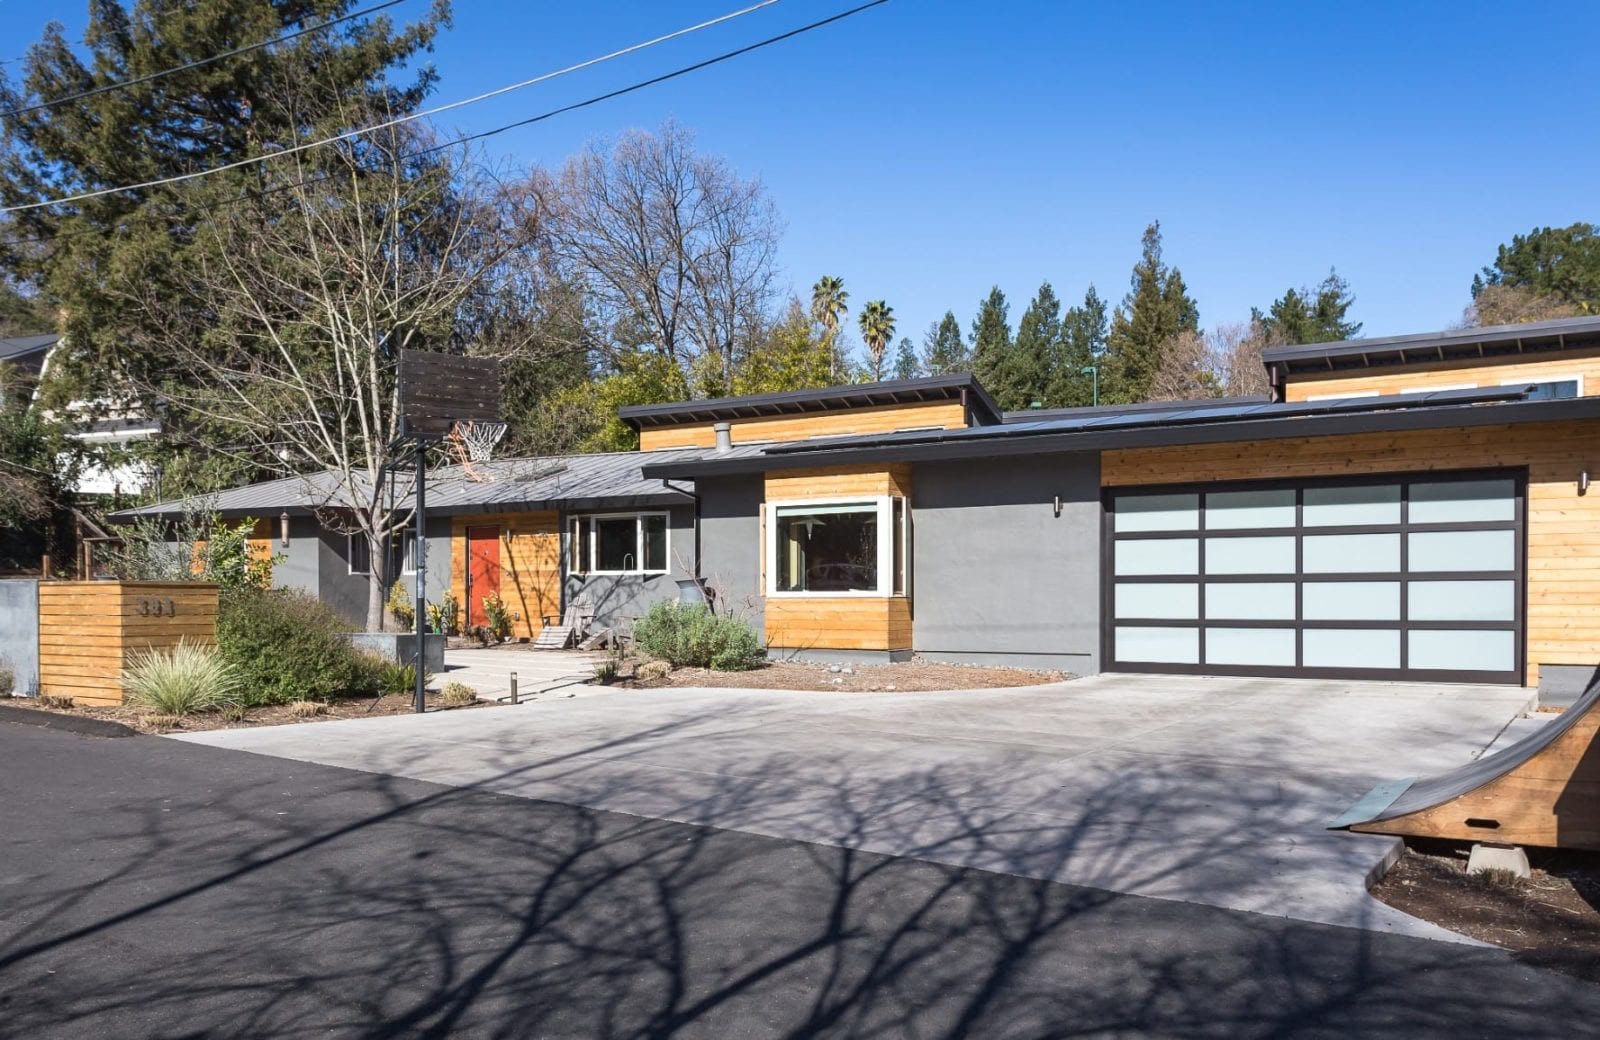 Award Winning Walnut Creek Contemprary Garage Additon and Home Remodel